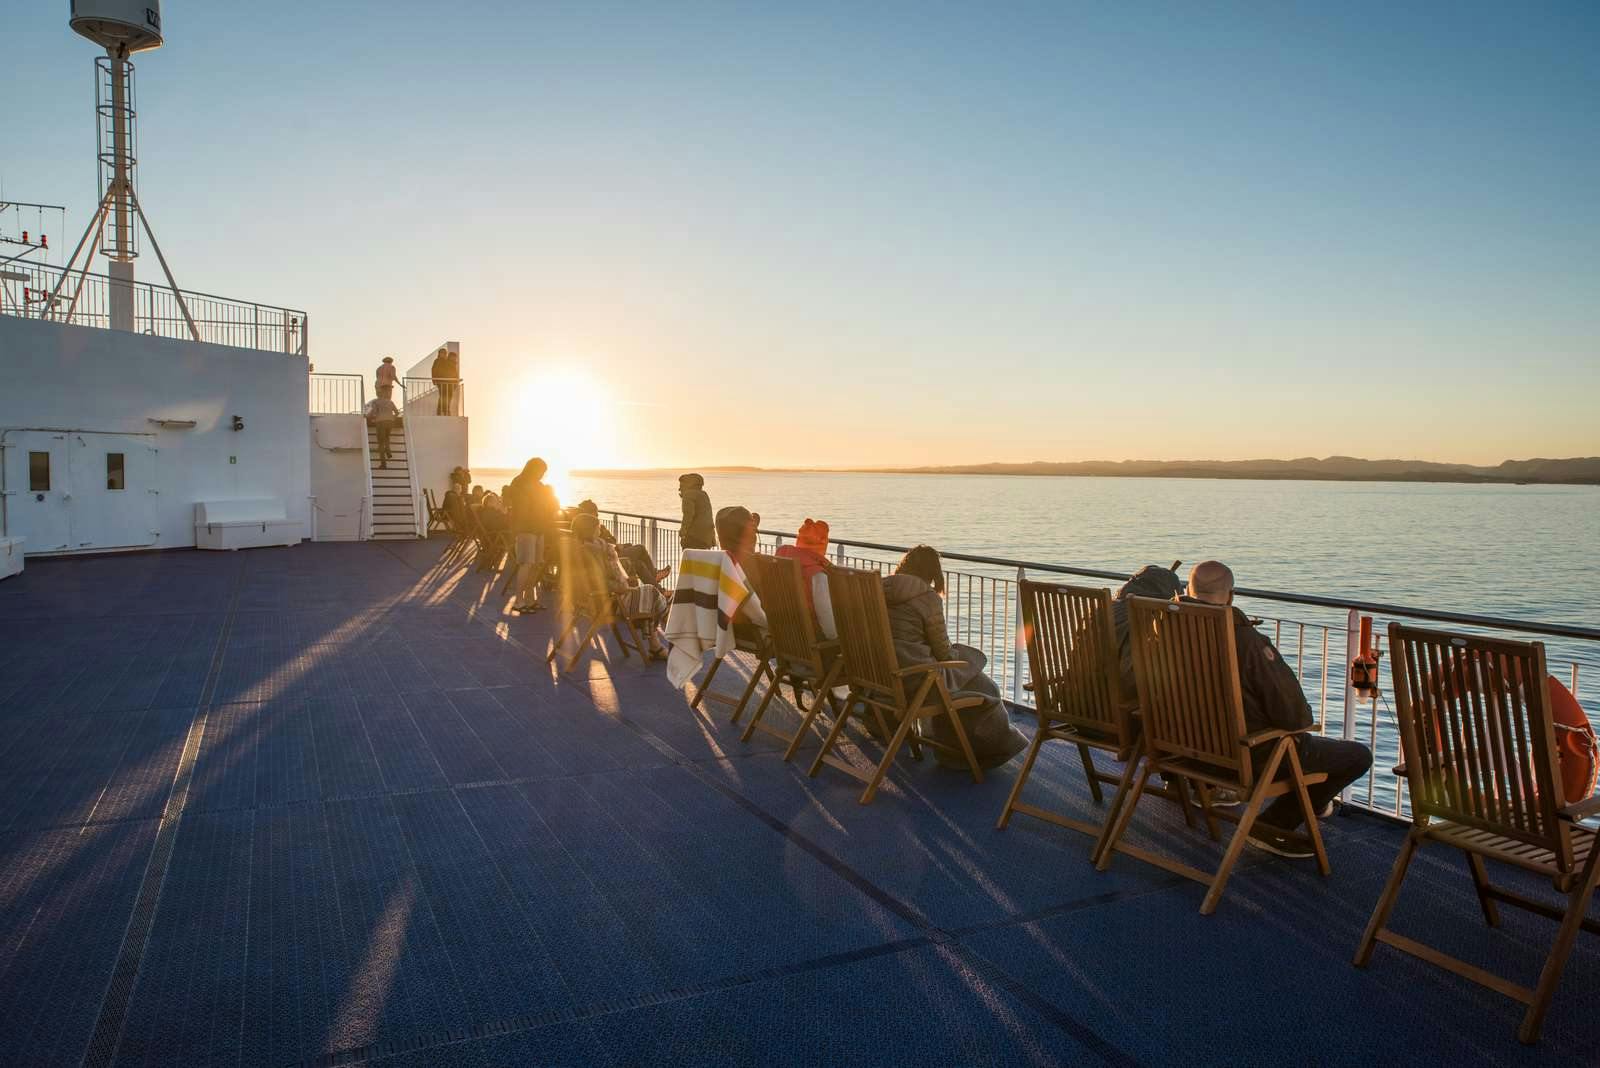 Passengers watching the midnight sun on deck of the Norröna